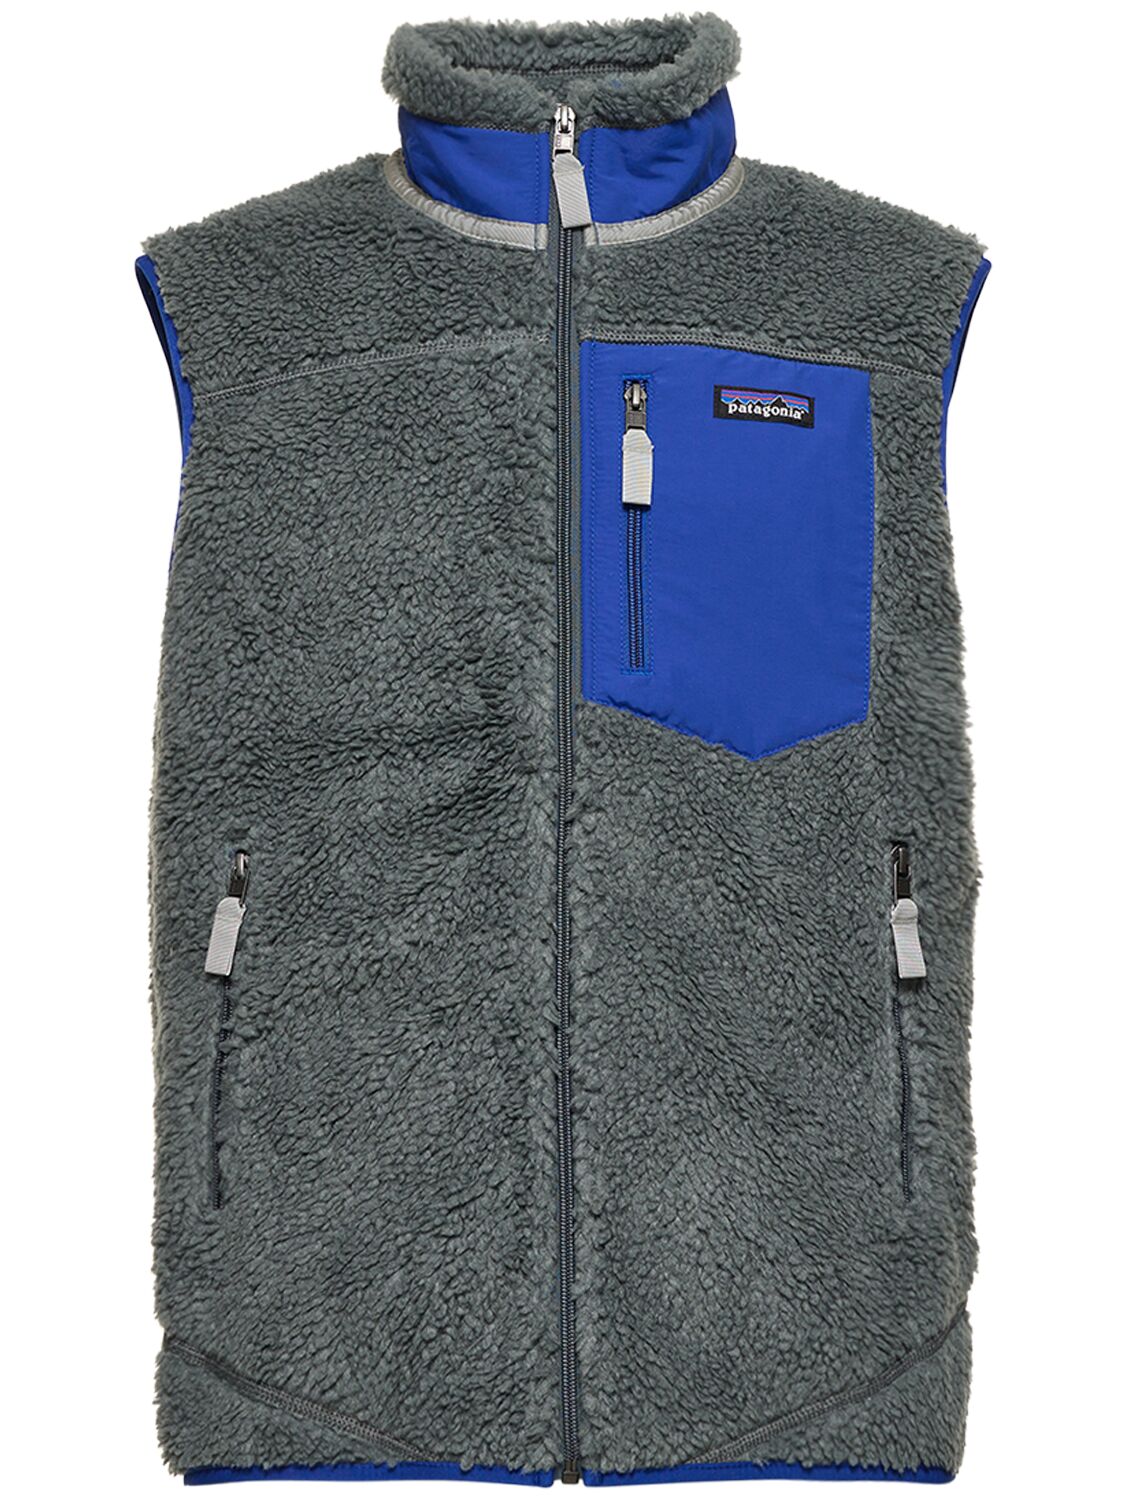 Classic Retro-x Recycled Tech Vest image